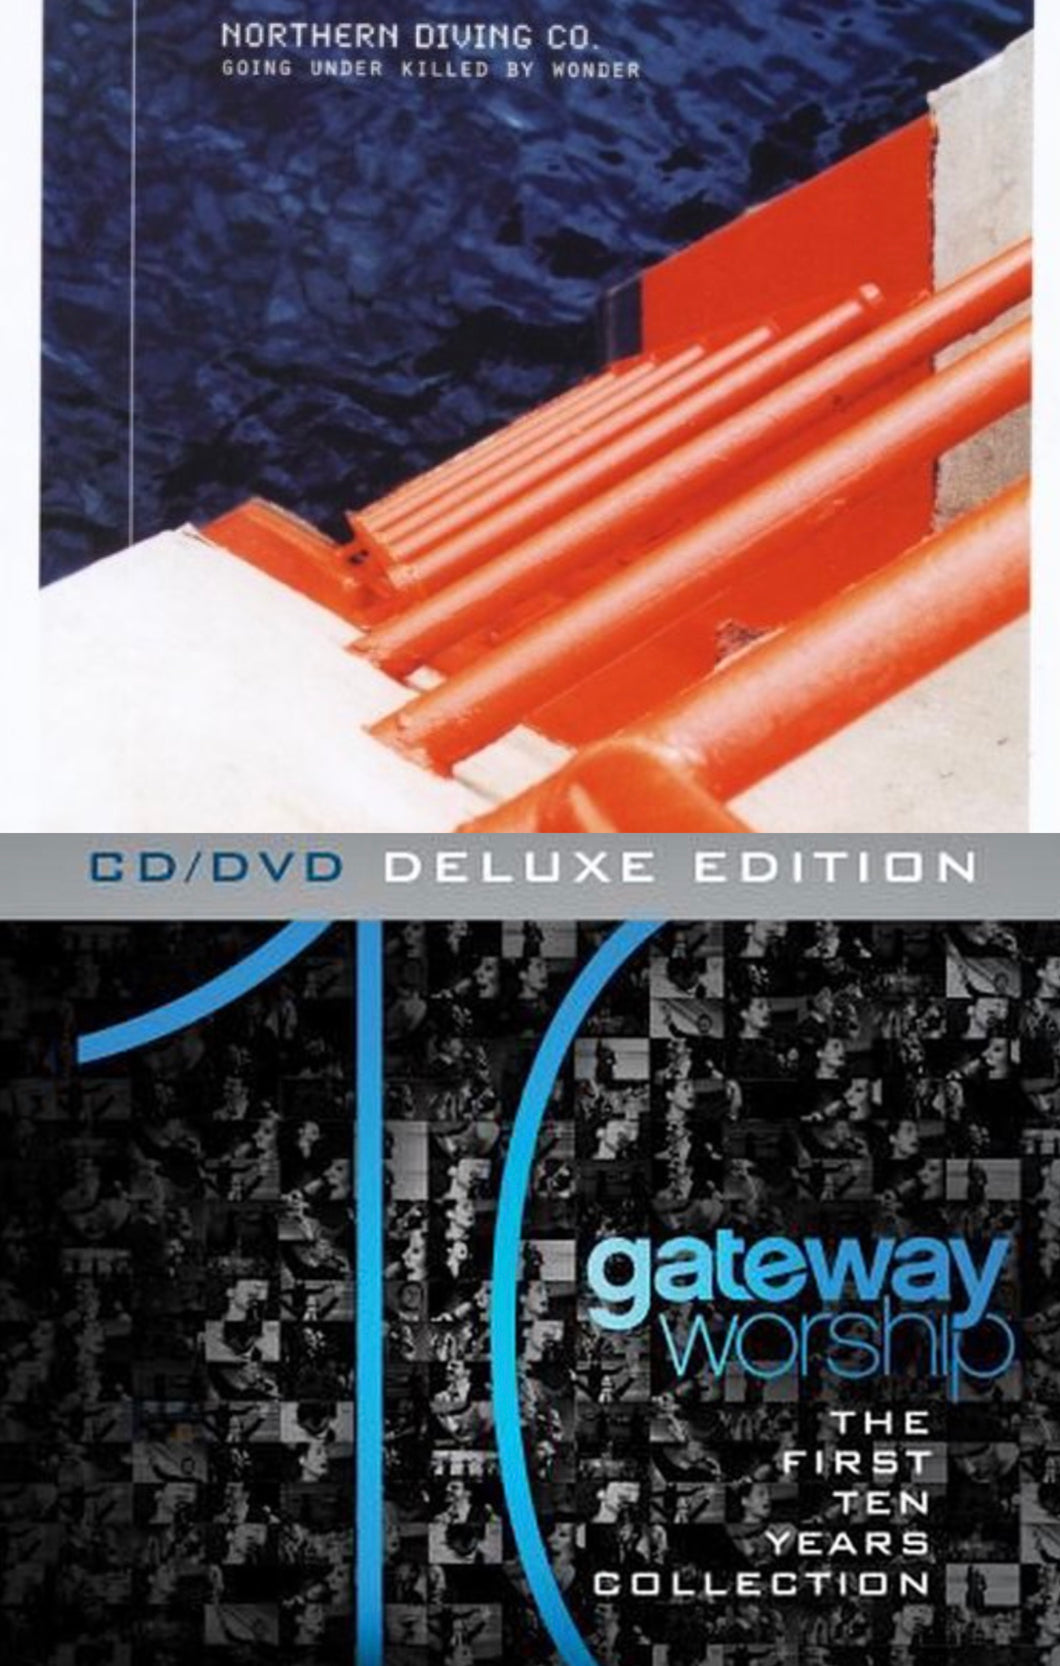 Northern Diving Going Under Killed By Wonder + Gateway Worship First Ten Years 2CD/DVD